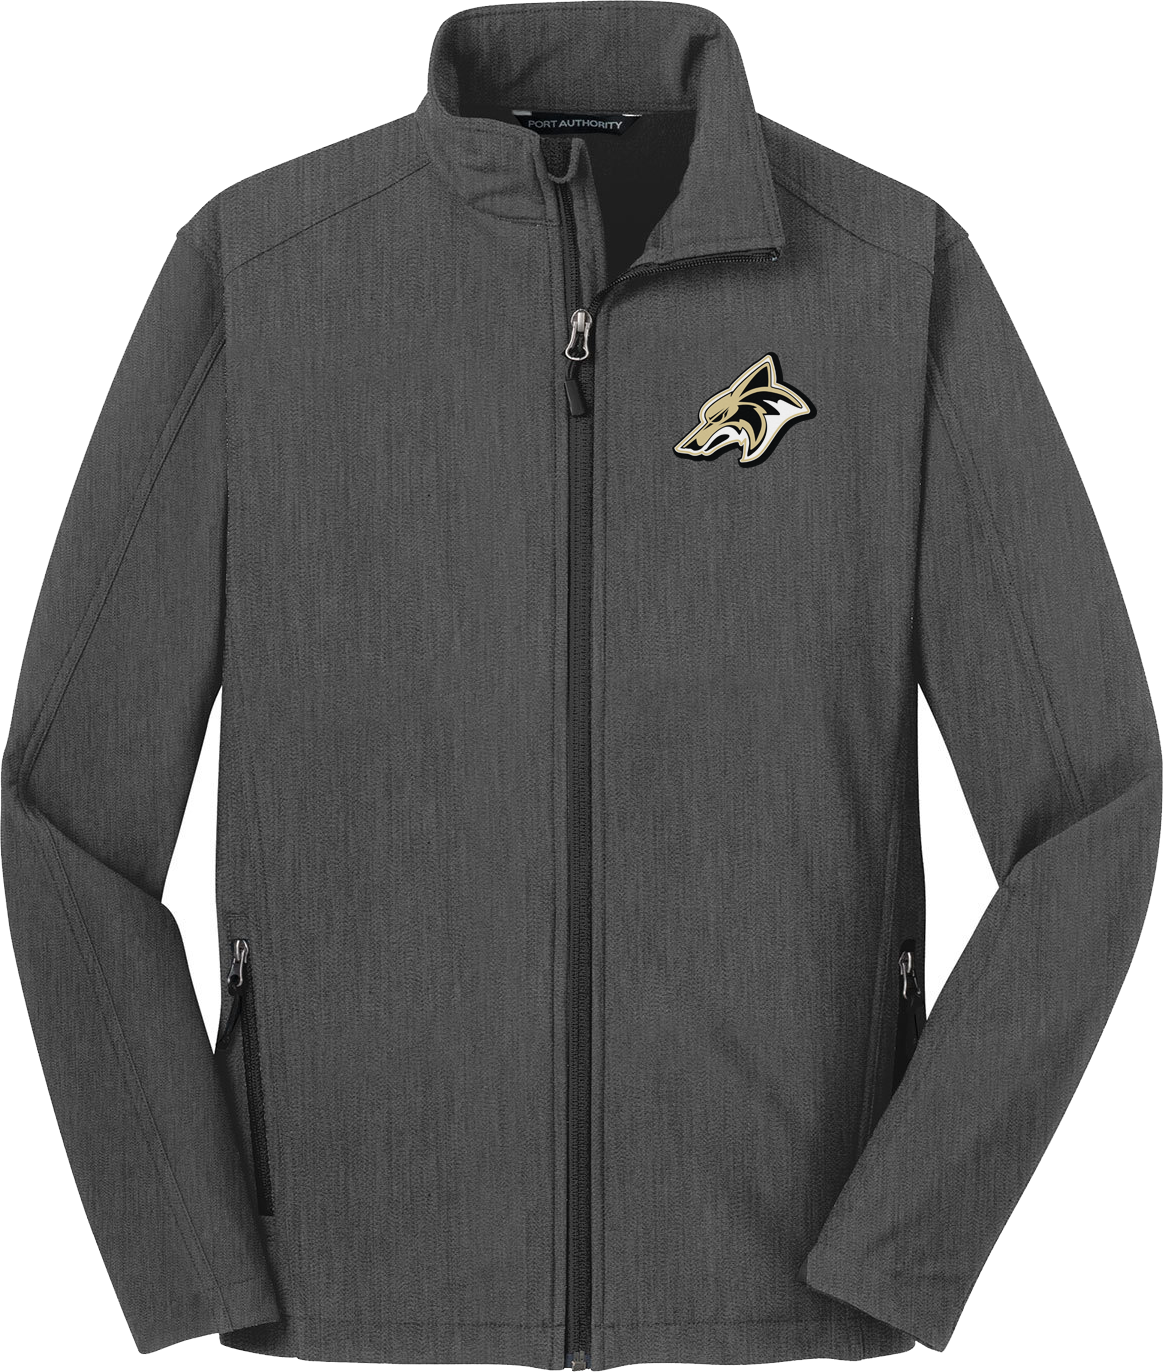 Dane County Lacrosse Charcoal Soft Shell Jacket